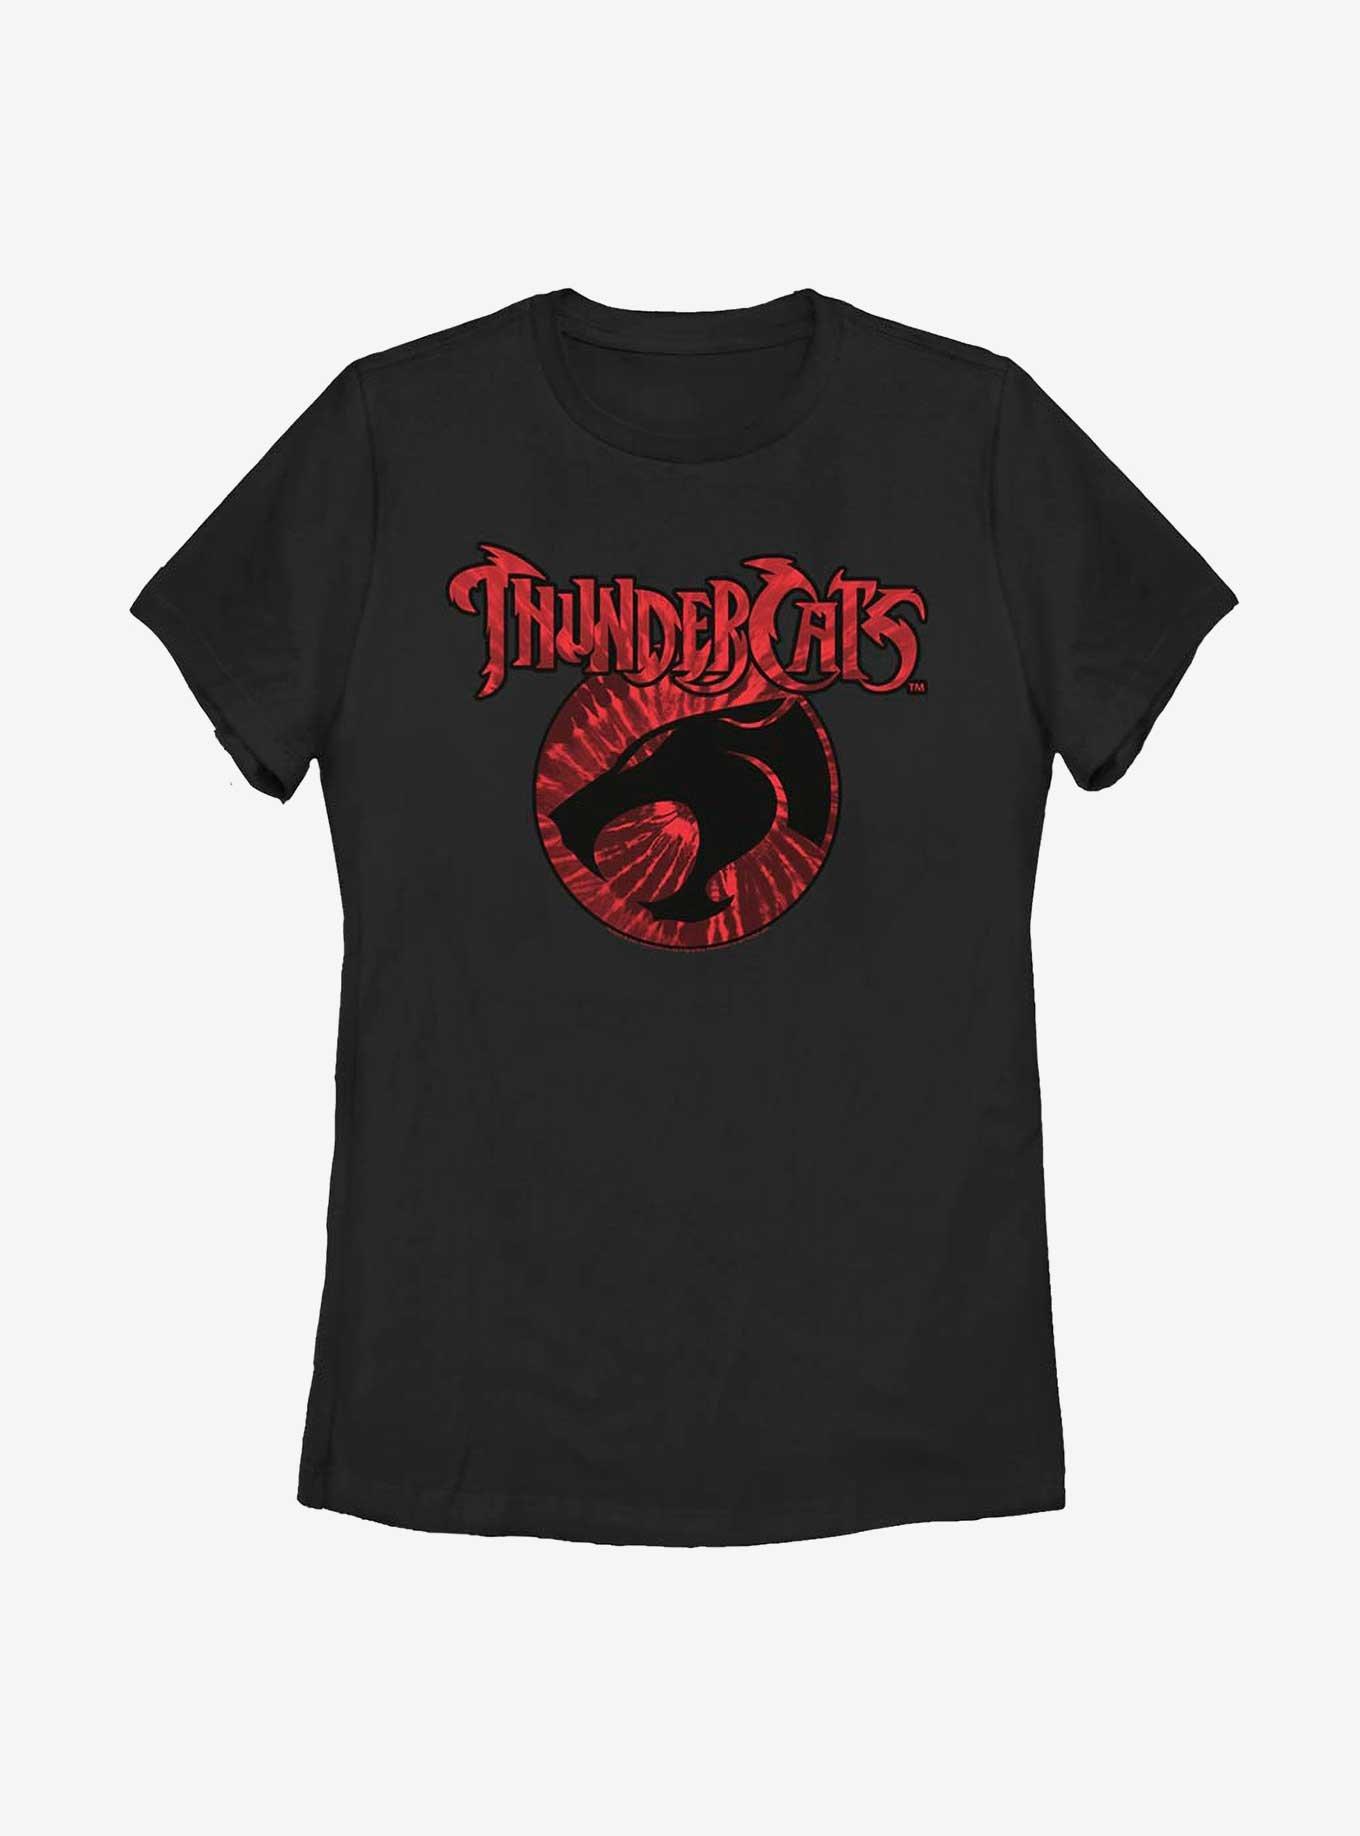 Thundercats Tie-Dye Logo Womens T-Shirt, BLACK, hi-res